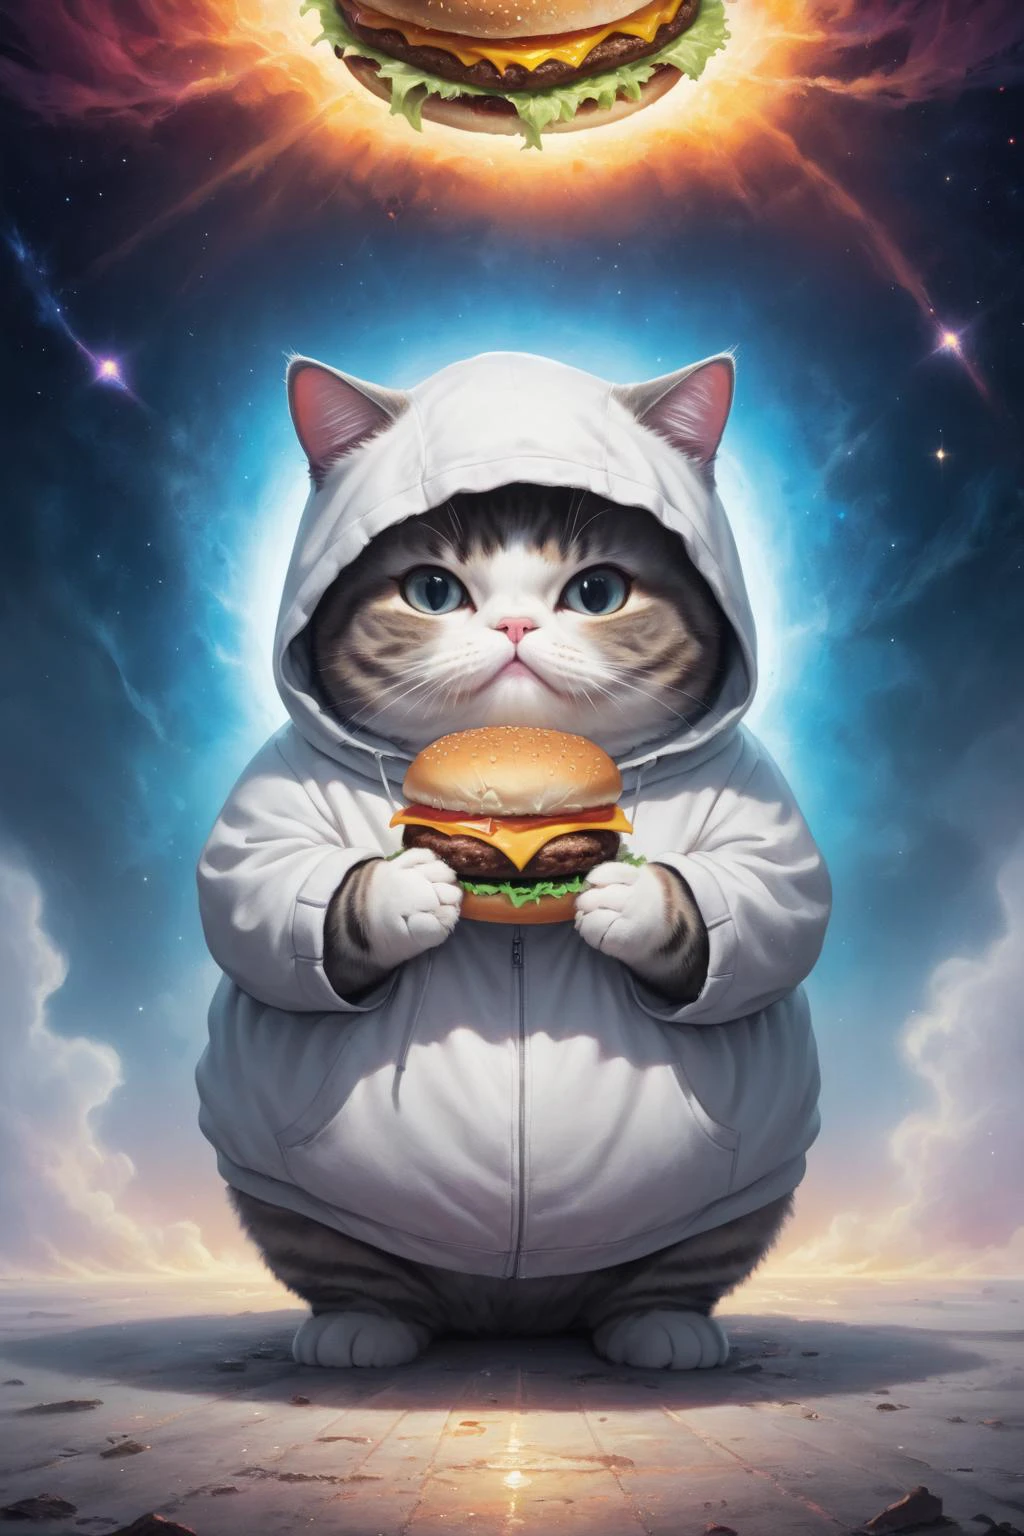 lienzo cósmico,(Trasfondo distópico:1.3), impecable, limpio, Obra maestra, cuadro de un gato gordito, Usando sudadera con capucha, sosteniendo hamburguesa, Niebla ligera,   